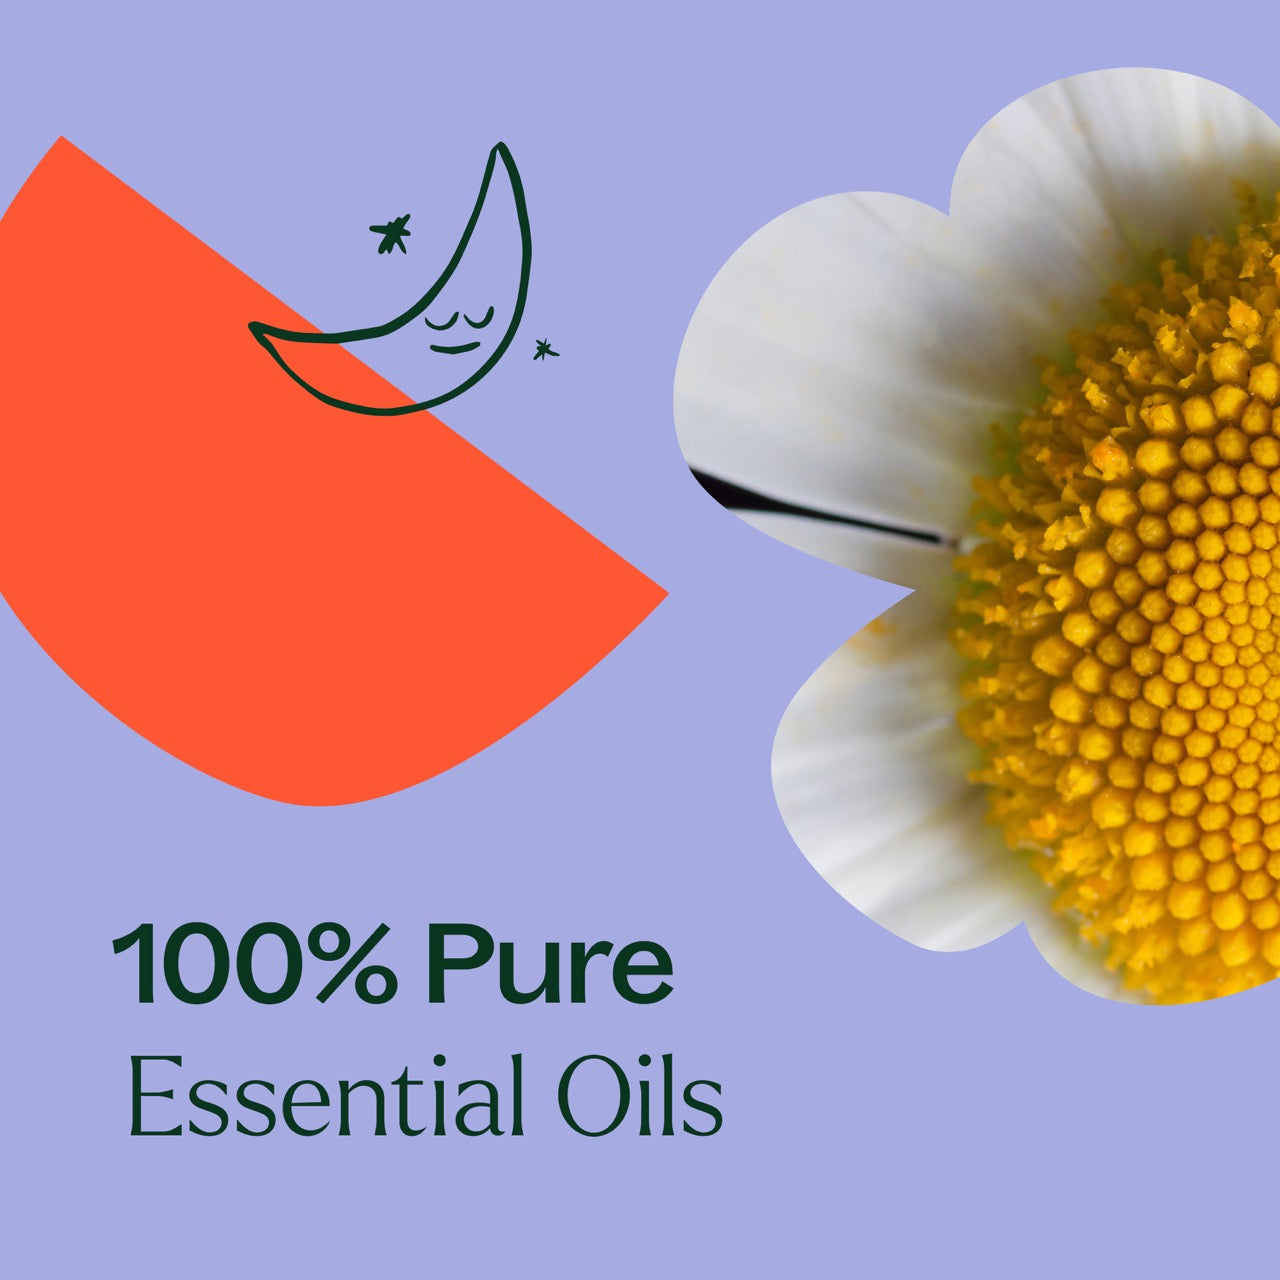 Sweet Slumber KidSafe Essential Oil is made of 100% pure essential oils